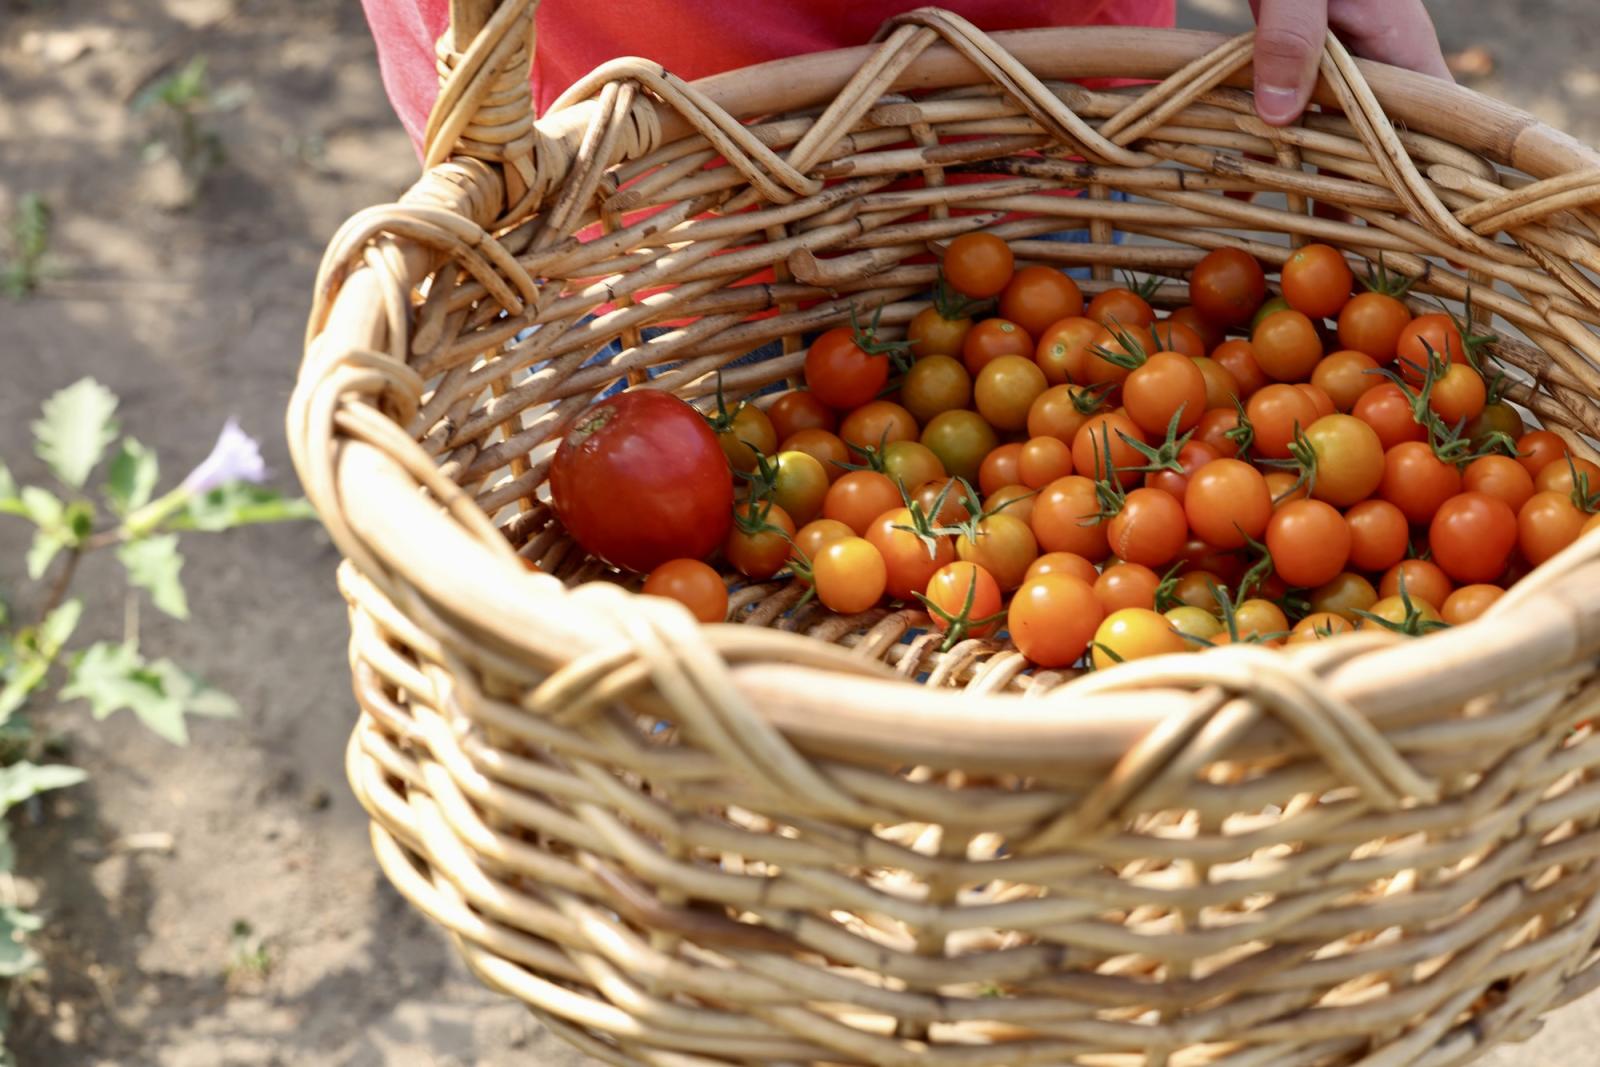 Basket of fresh picked cherry tomatoes